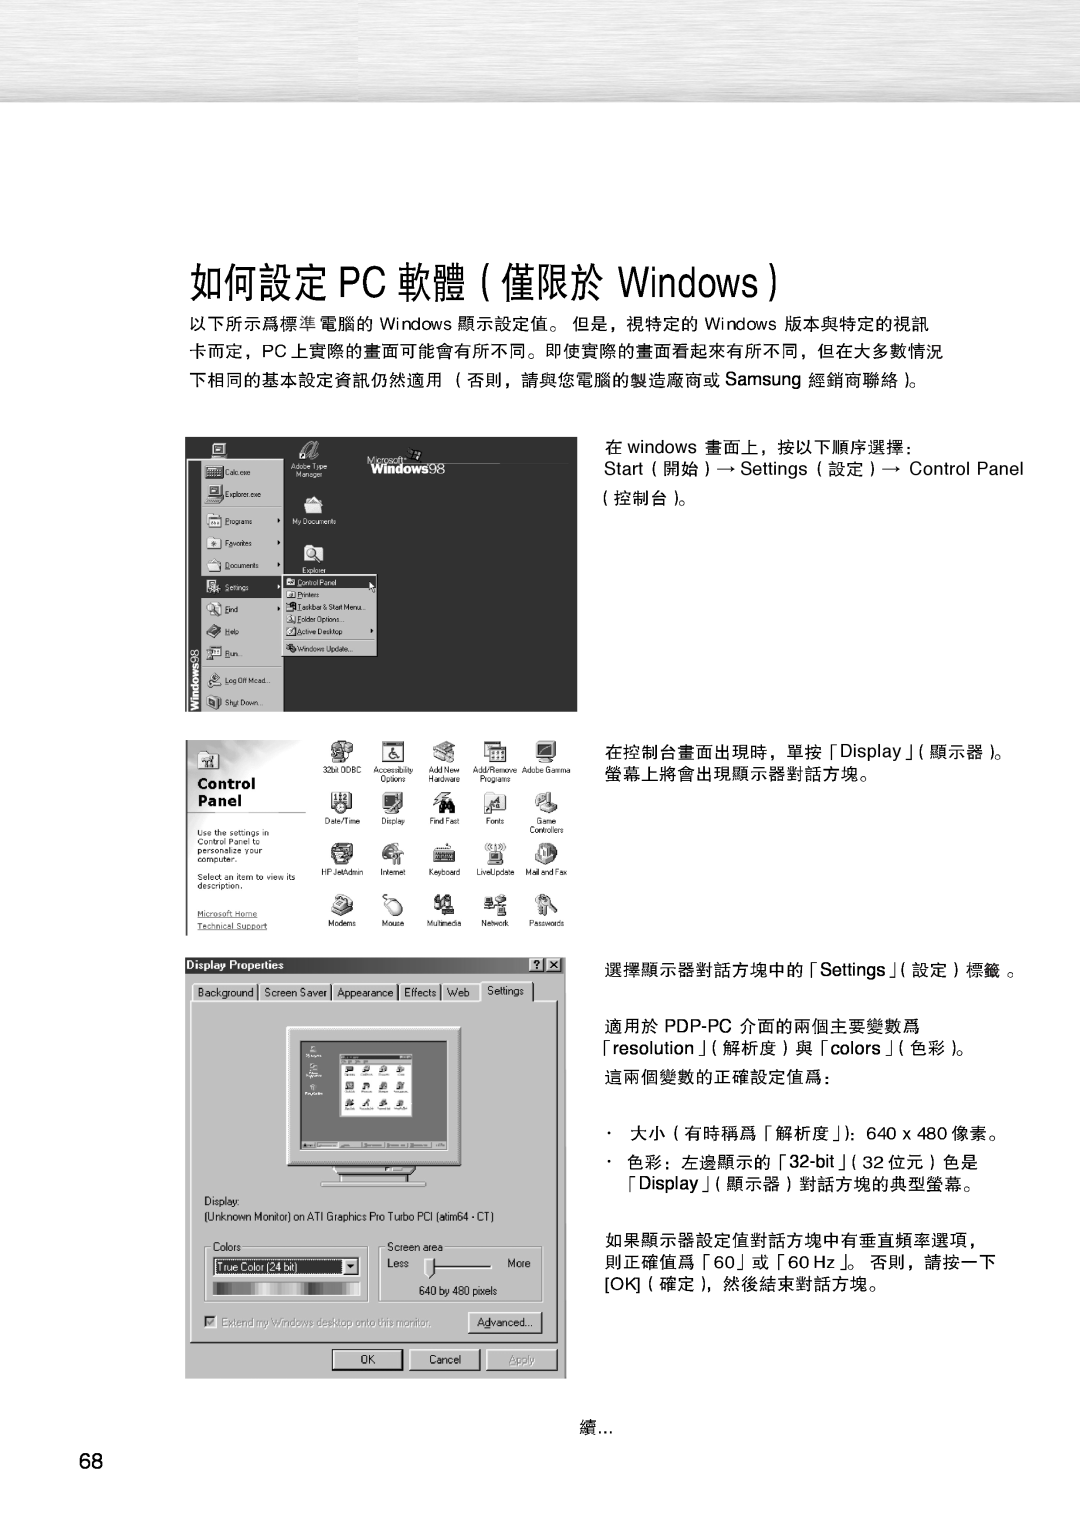 Samsung PL-42D4S manual Samsung windows Start Settings Control Panel Display Settings PDP-PC, resolutioncolors, bitDisplay 